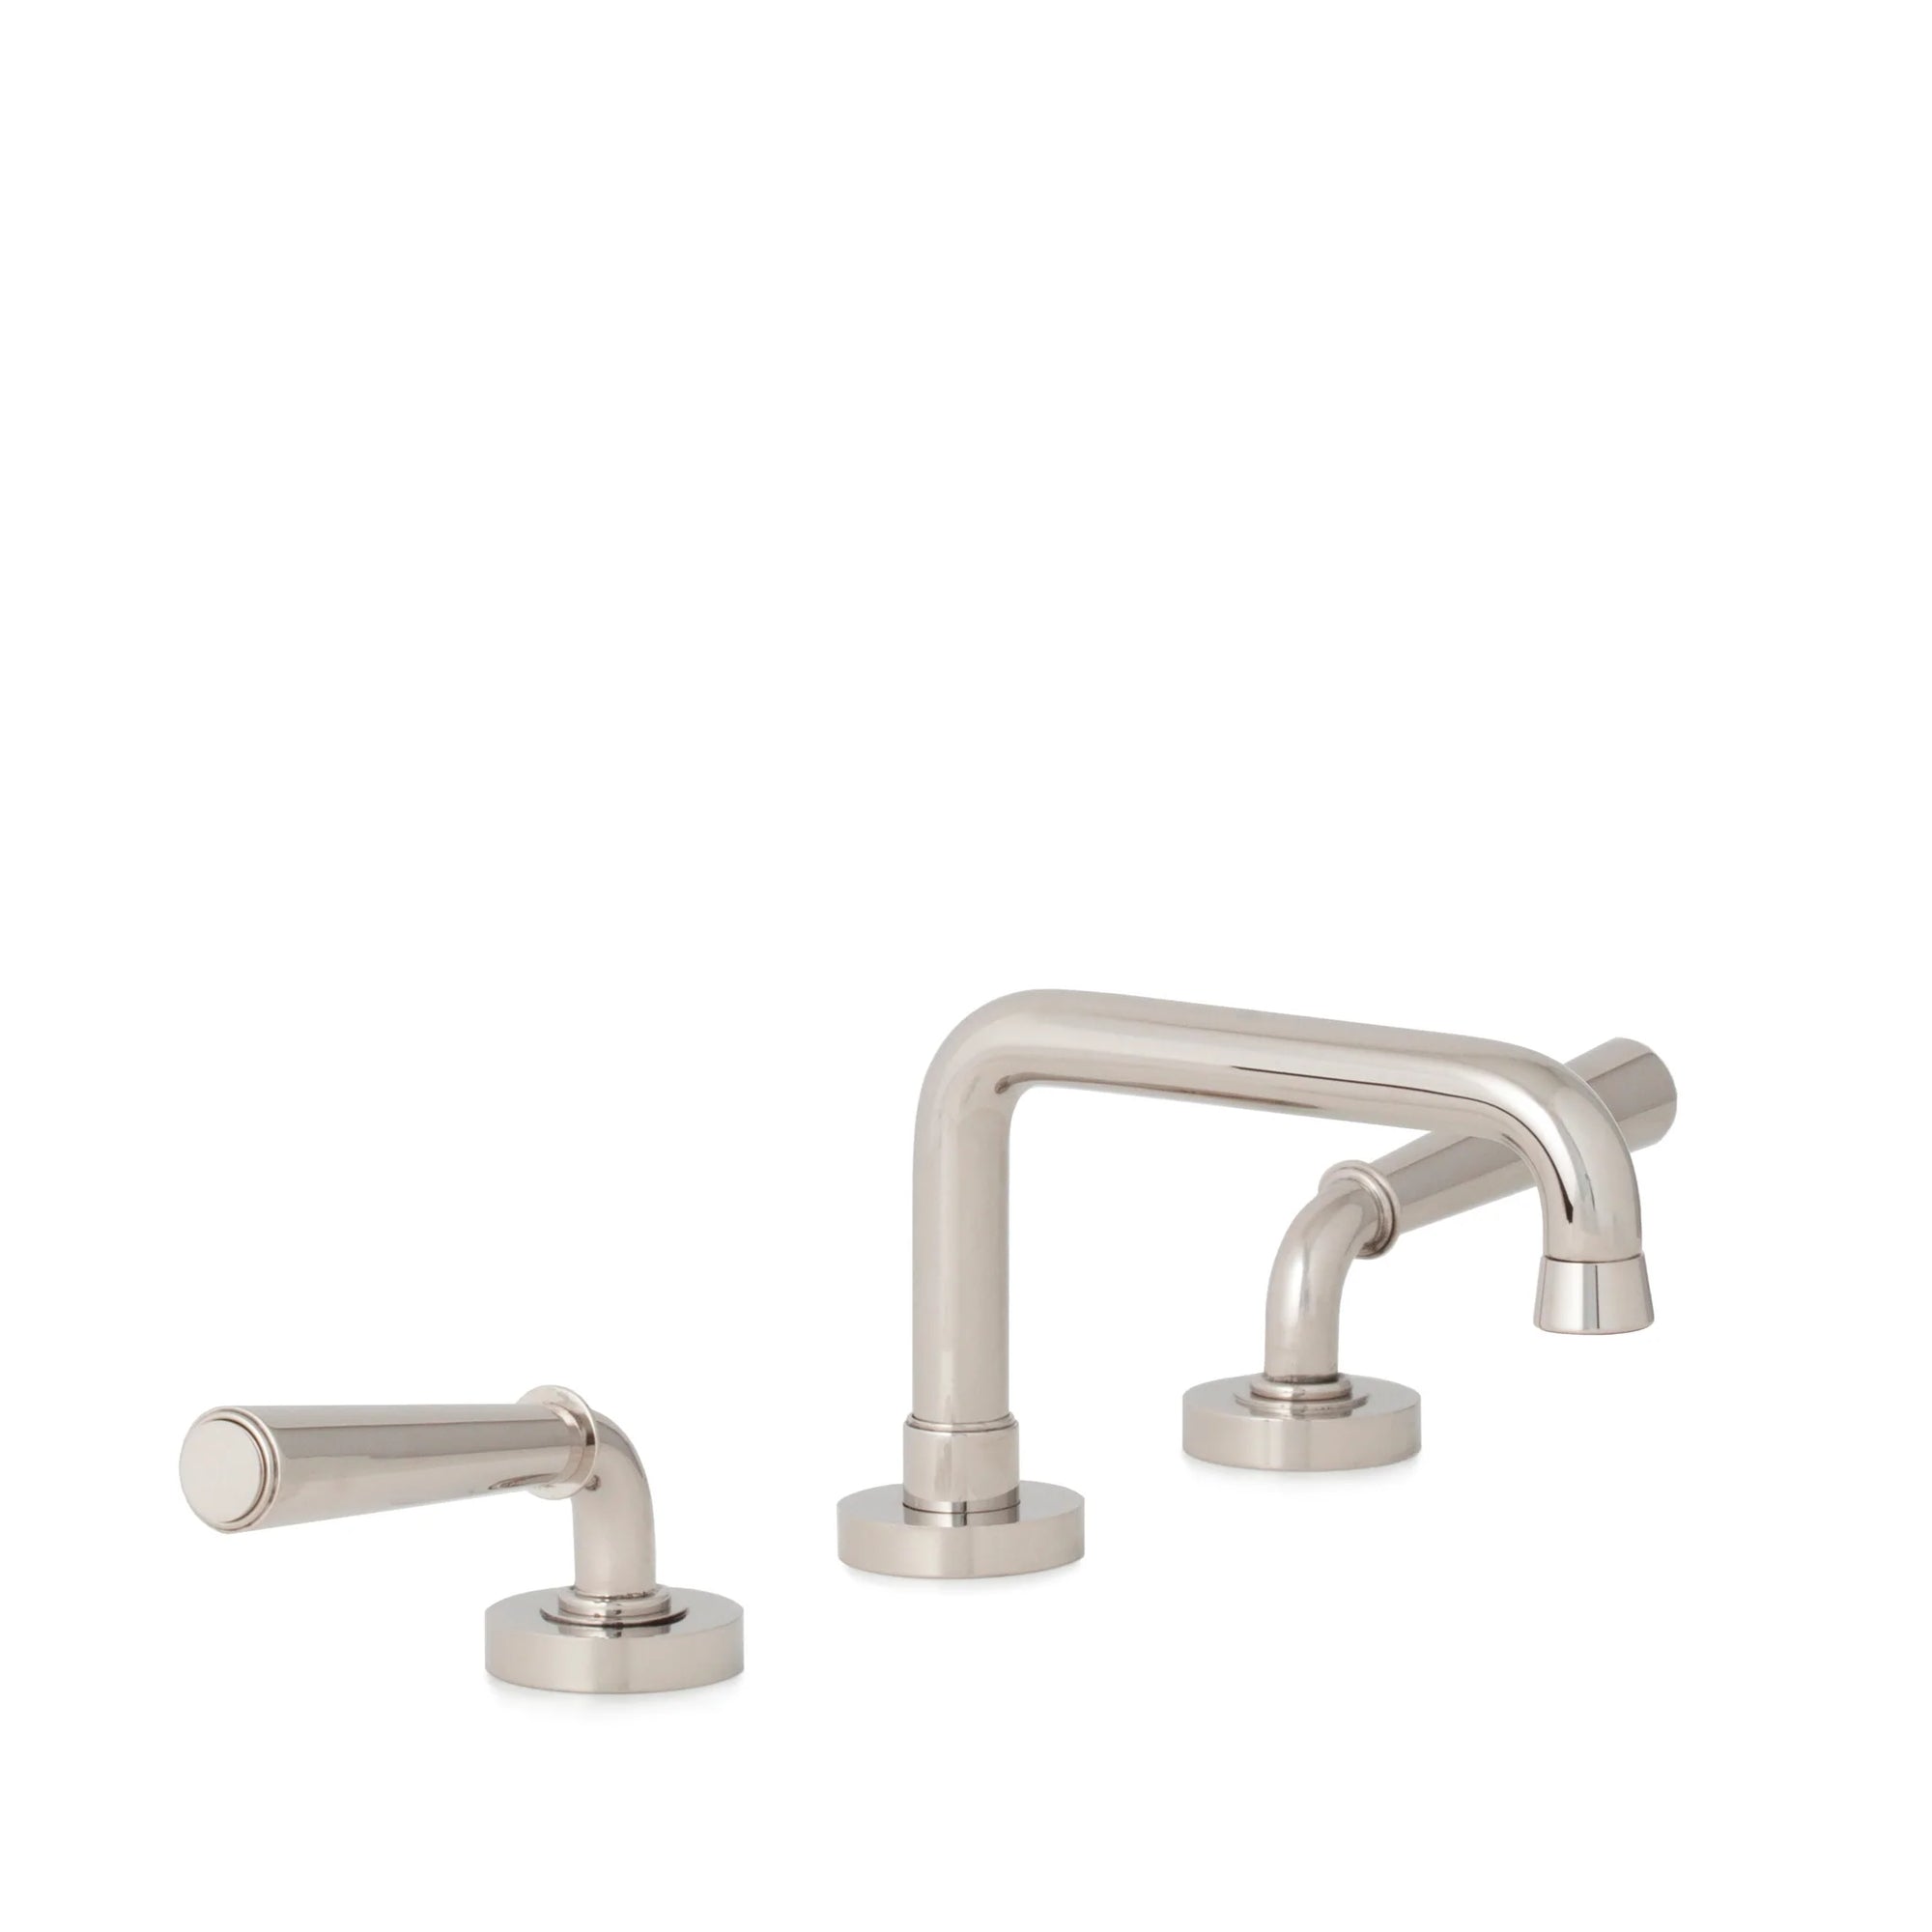 2070BSN806-HP Sherle Wagner International Dorian Lever Faucet Set in High Polished Platinum metal finish